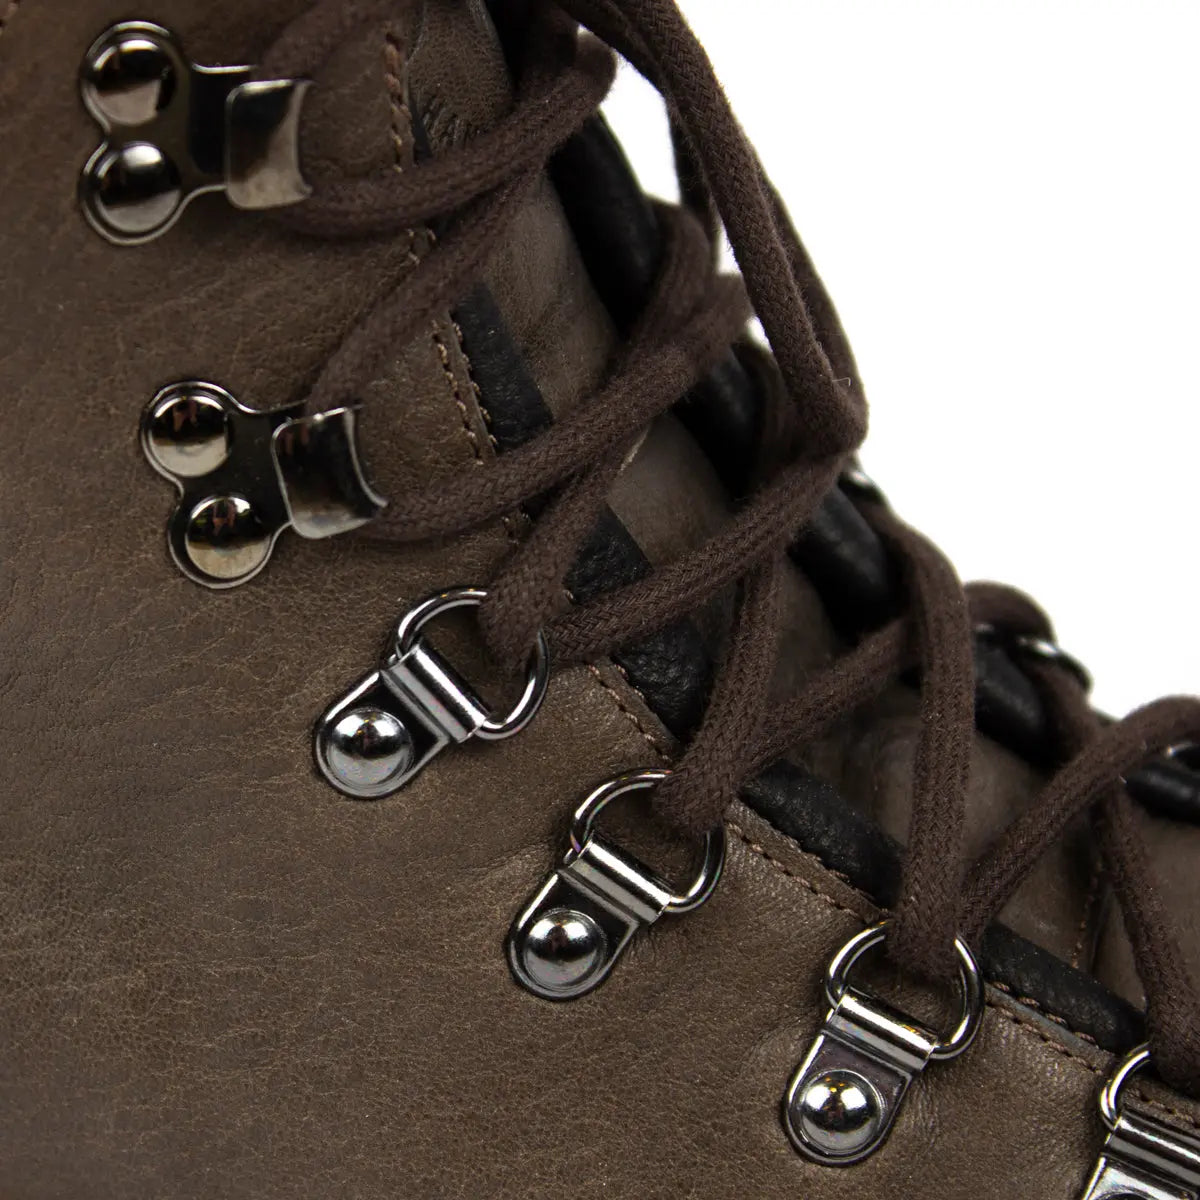 Piombo Brown Leather Explorer A300 Handmade Boots  Fracap   